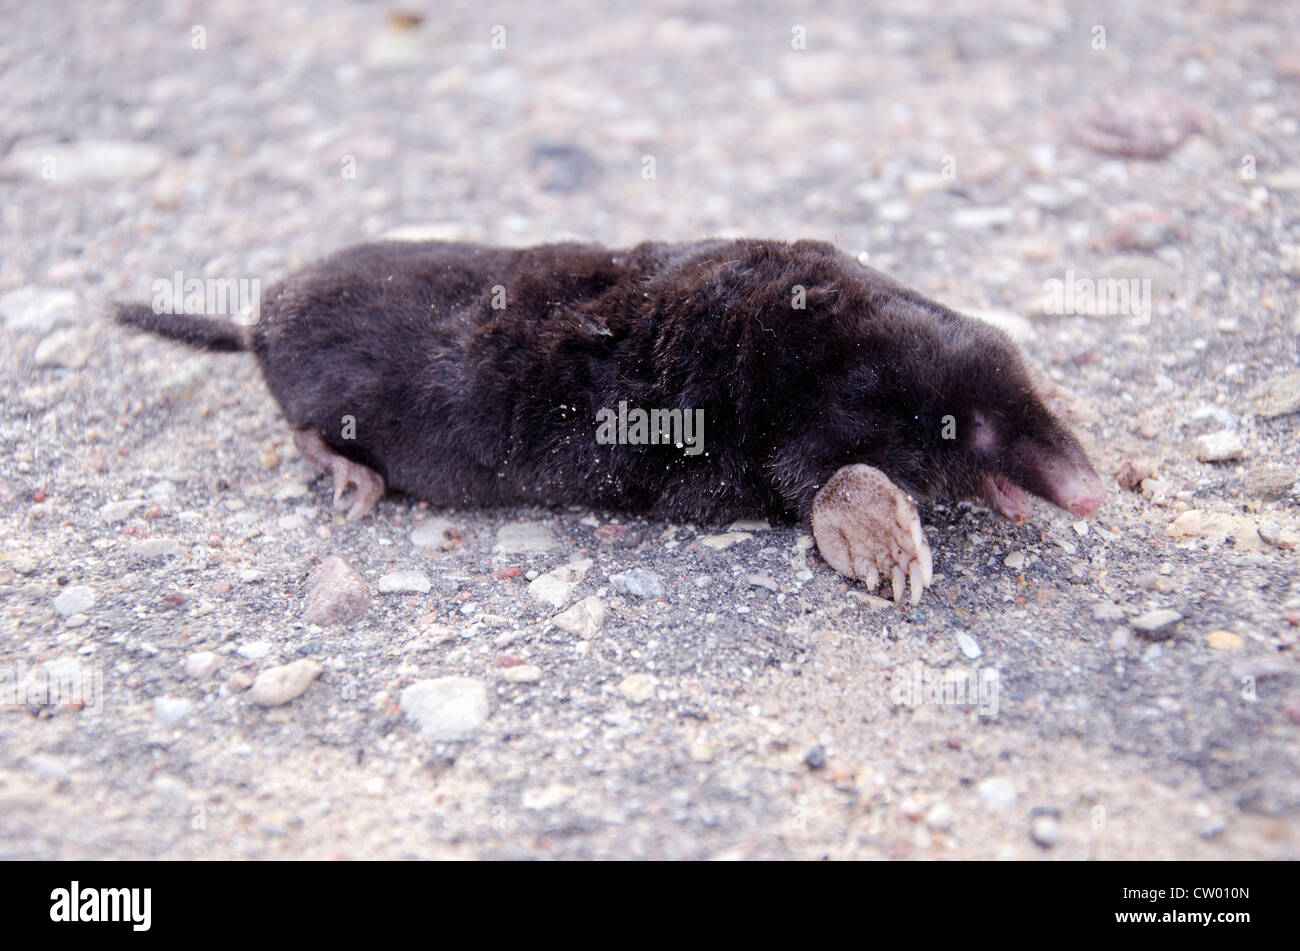 dead black mole on asphalt road Stock Photo